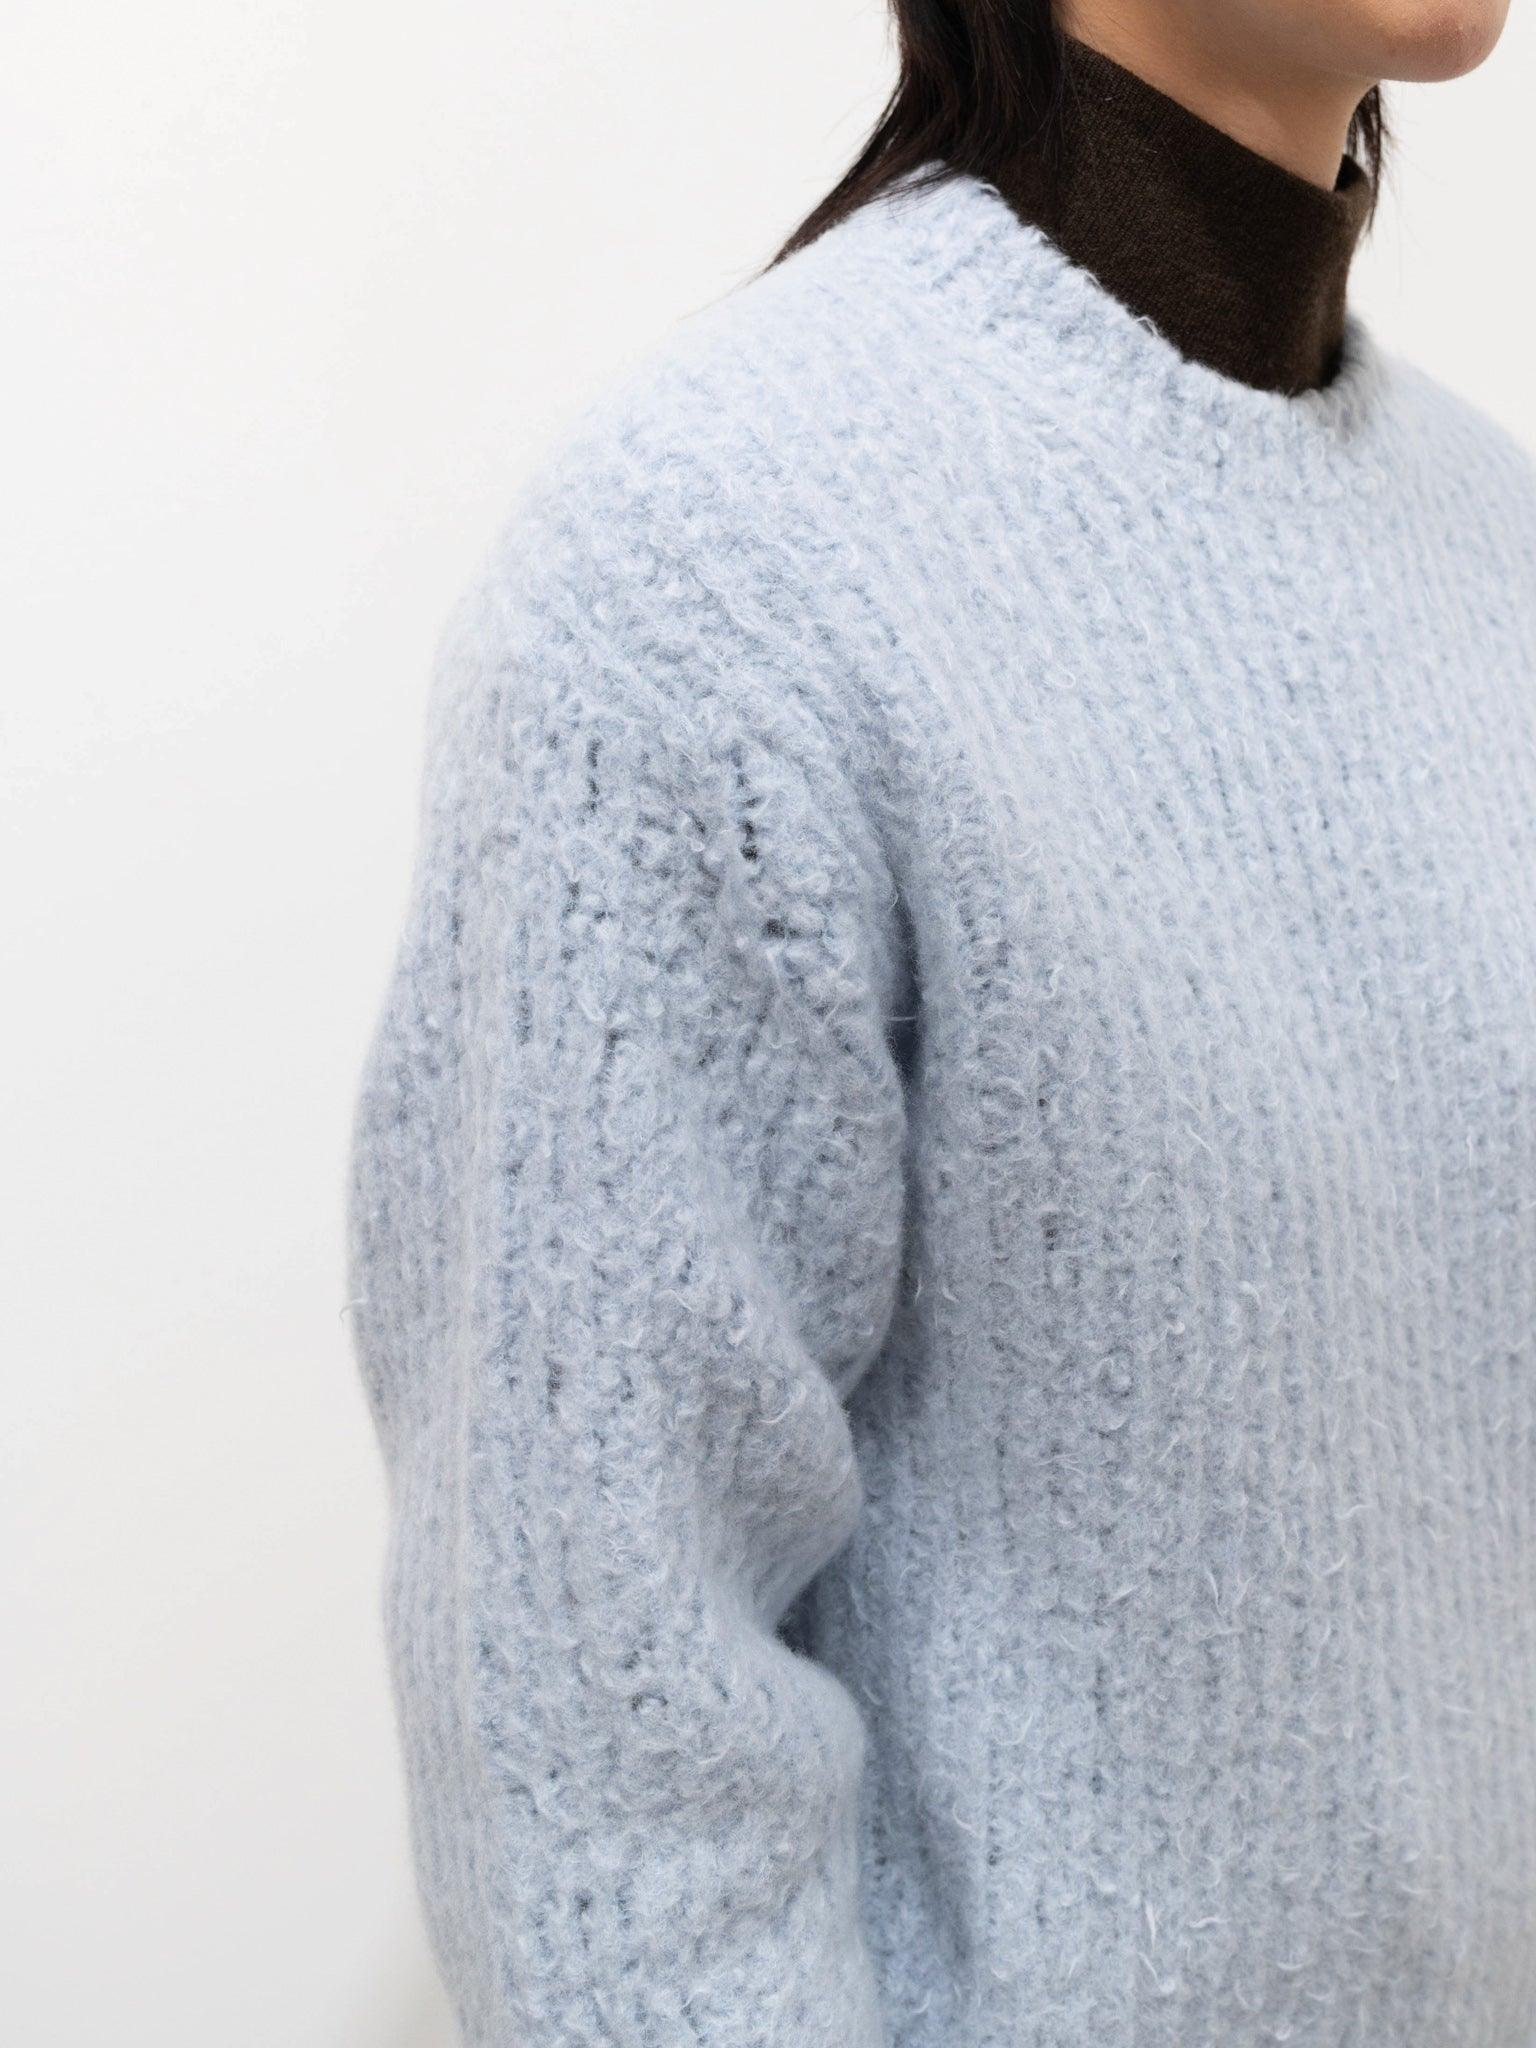 Namu Shop - Auralee Milled Wool Moal Knit Big Pullover - Light Blue